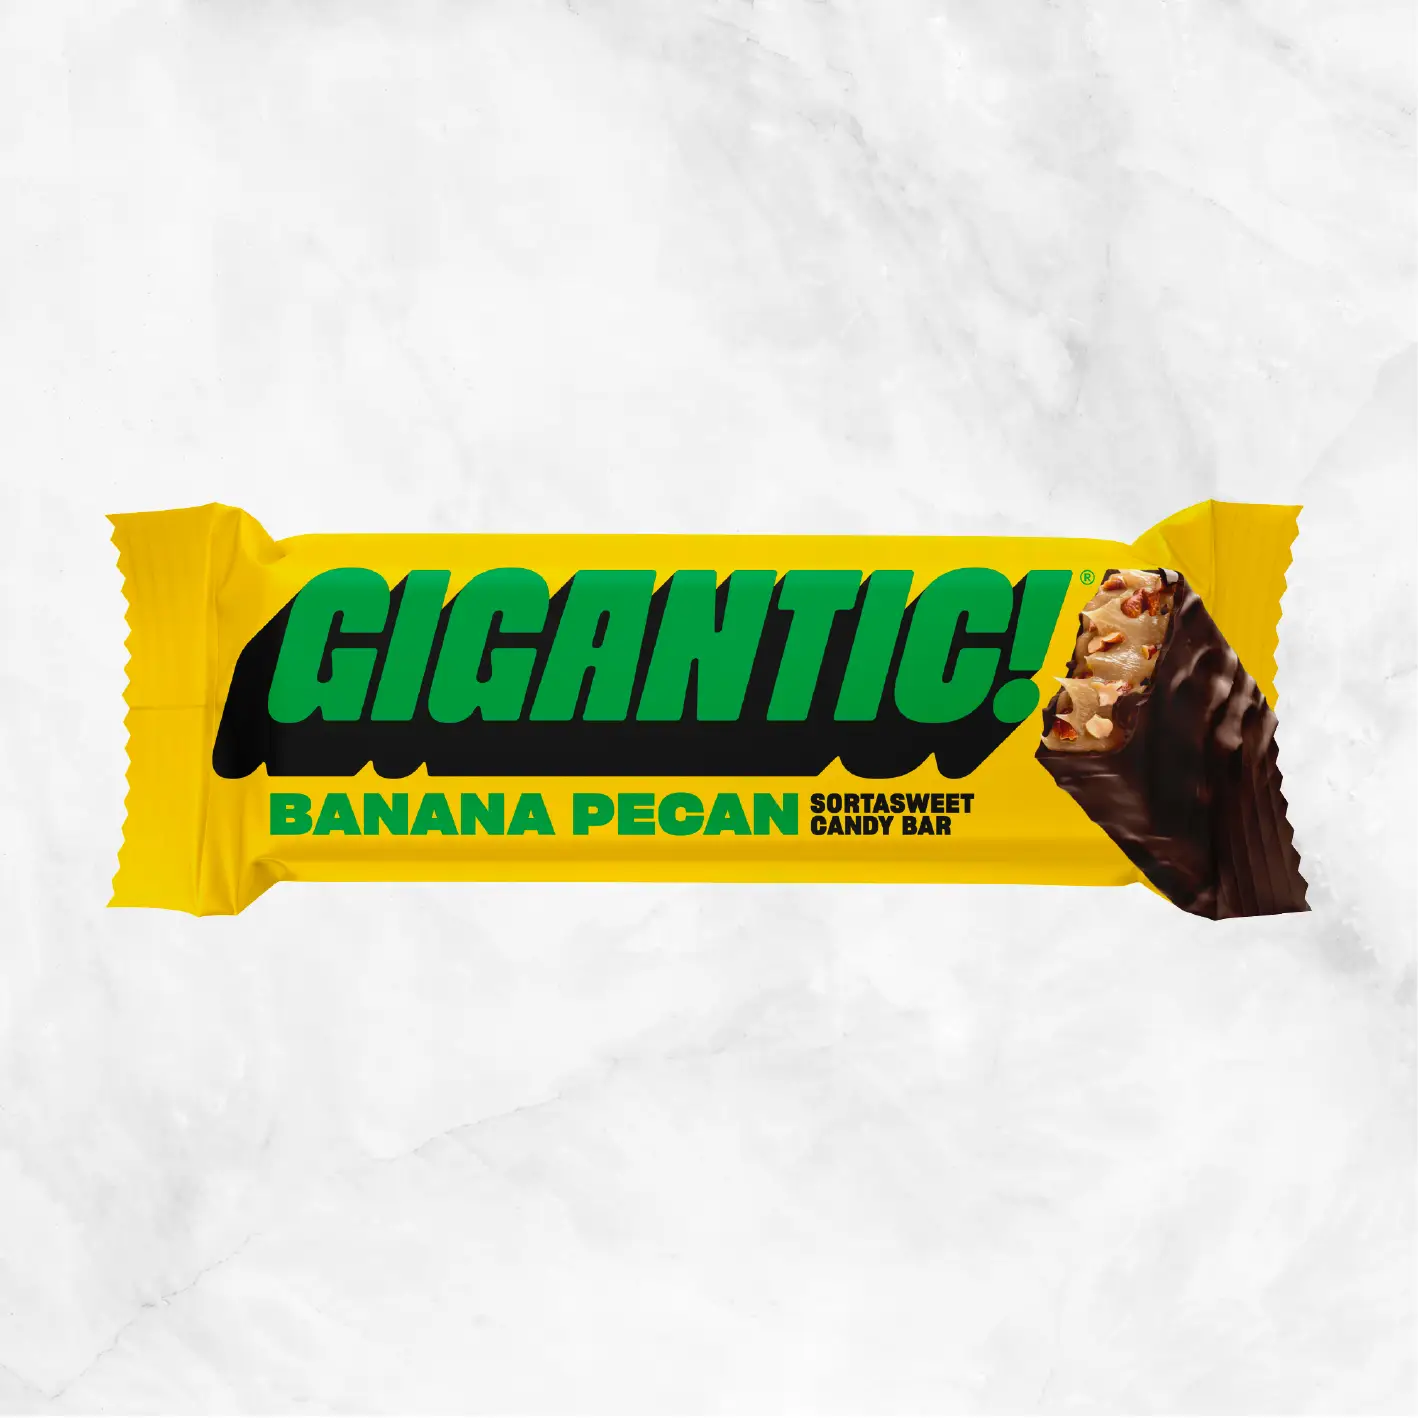 Banana Pecan Sortasweet Candy Bar